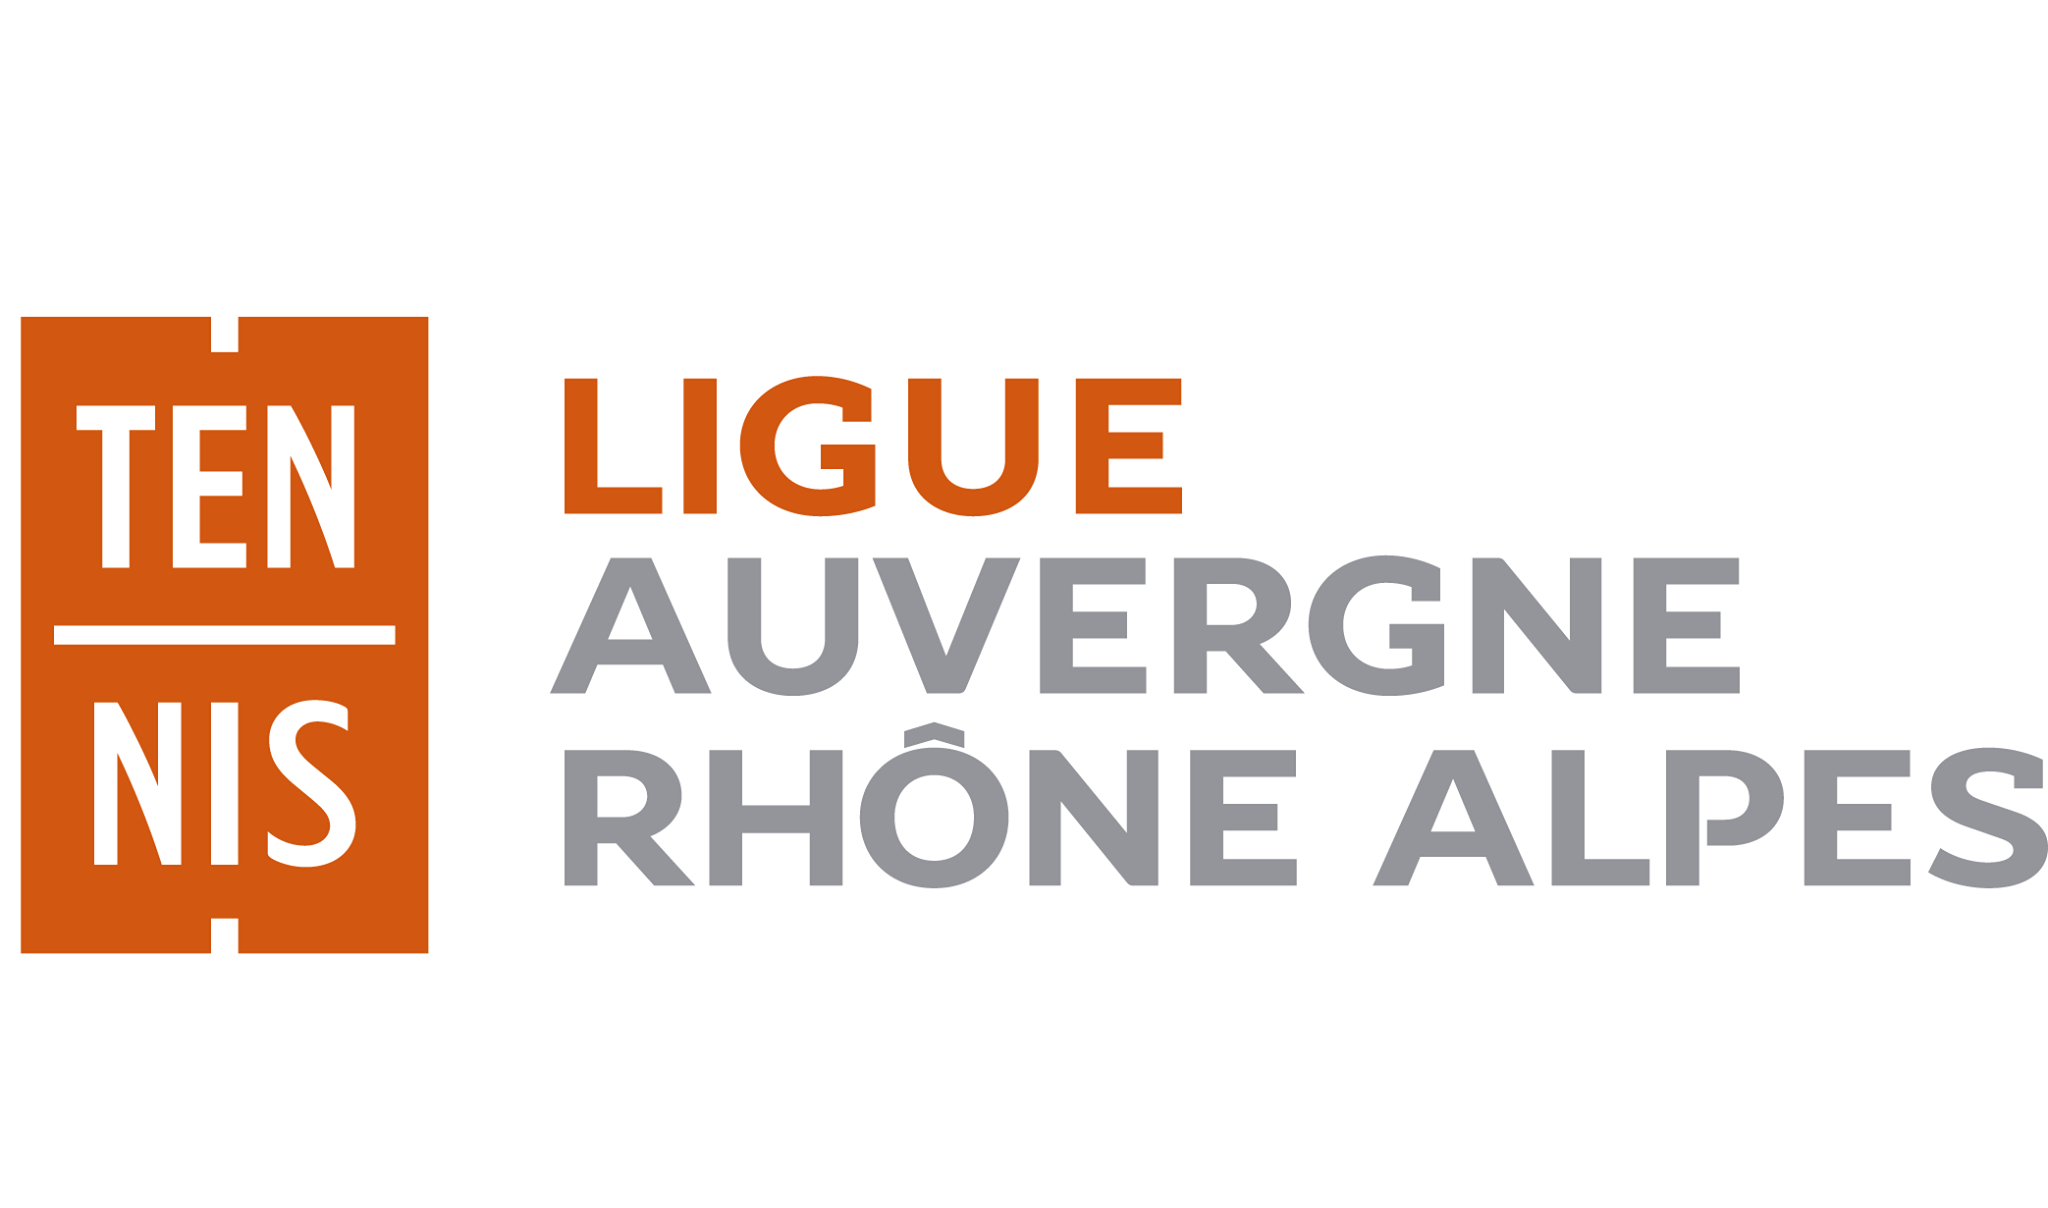 The Auvergne-Rhône-Alpes league is recruiting!